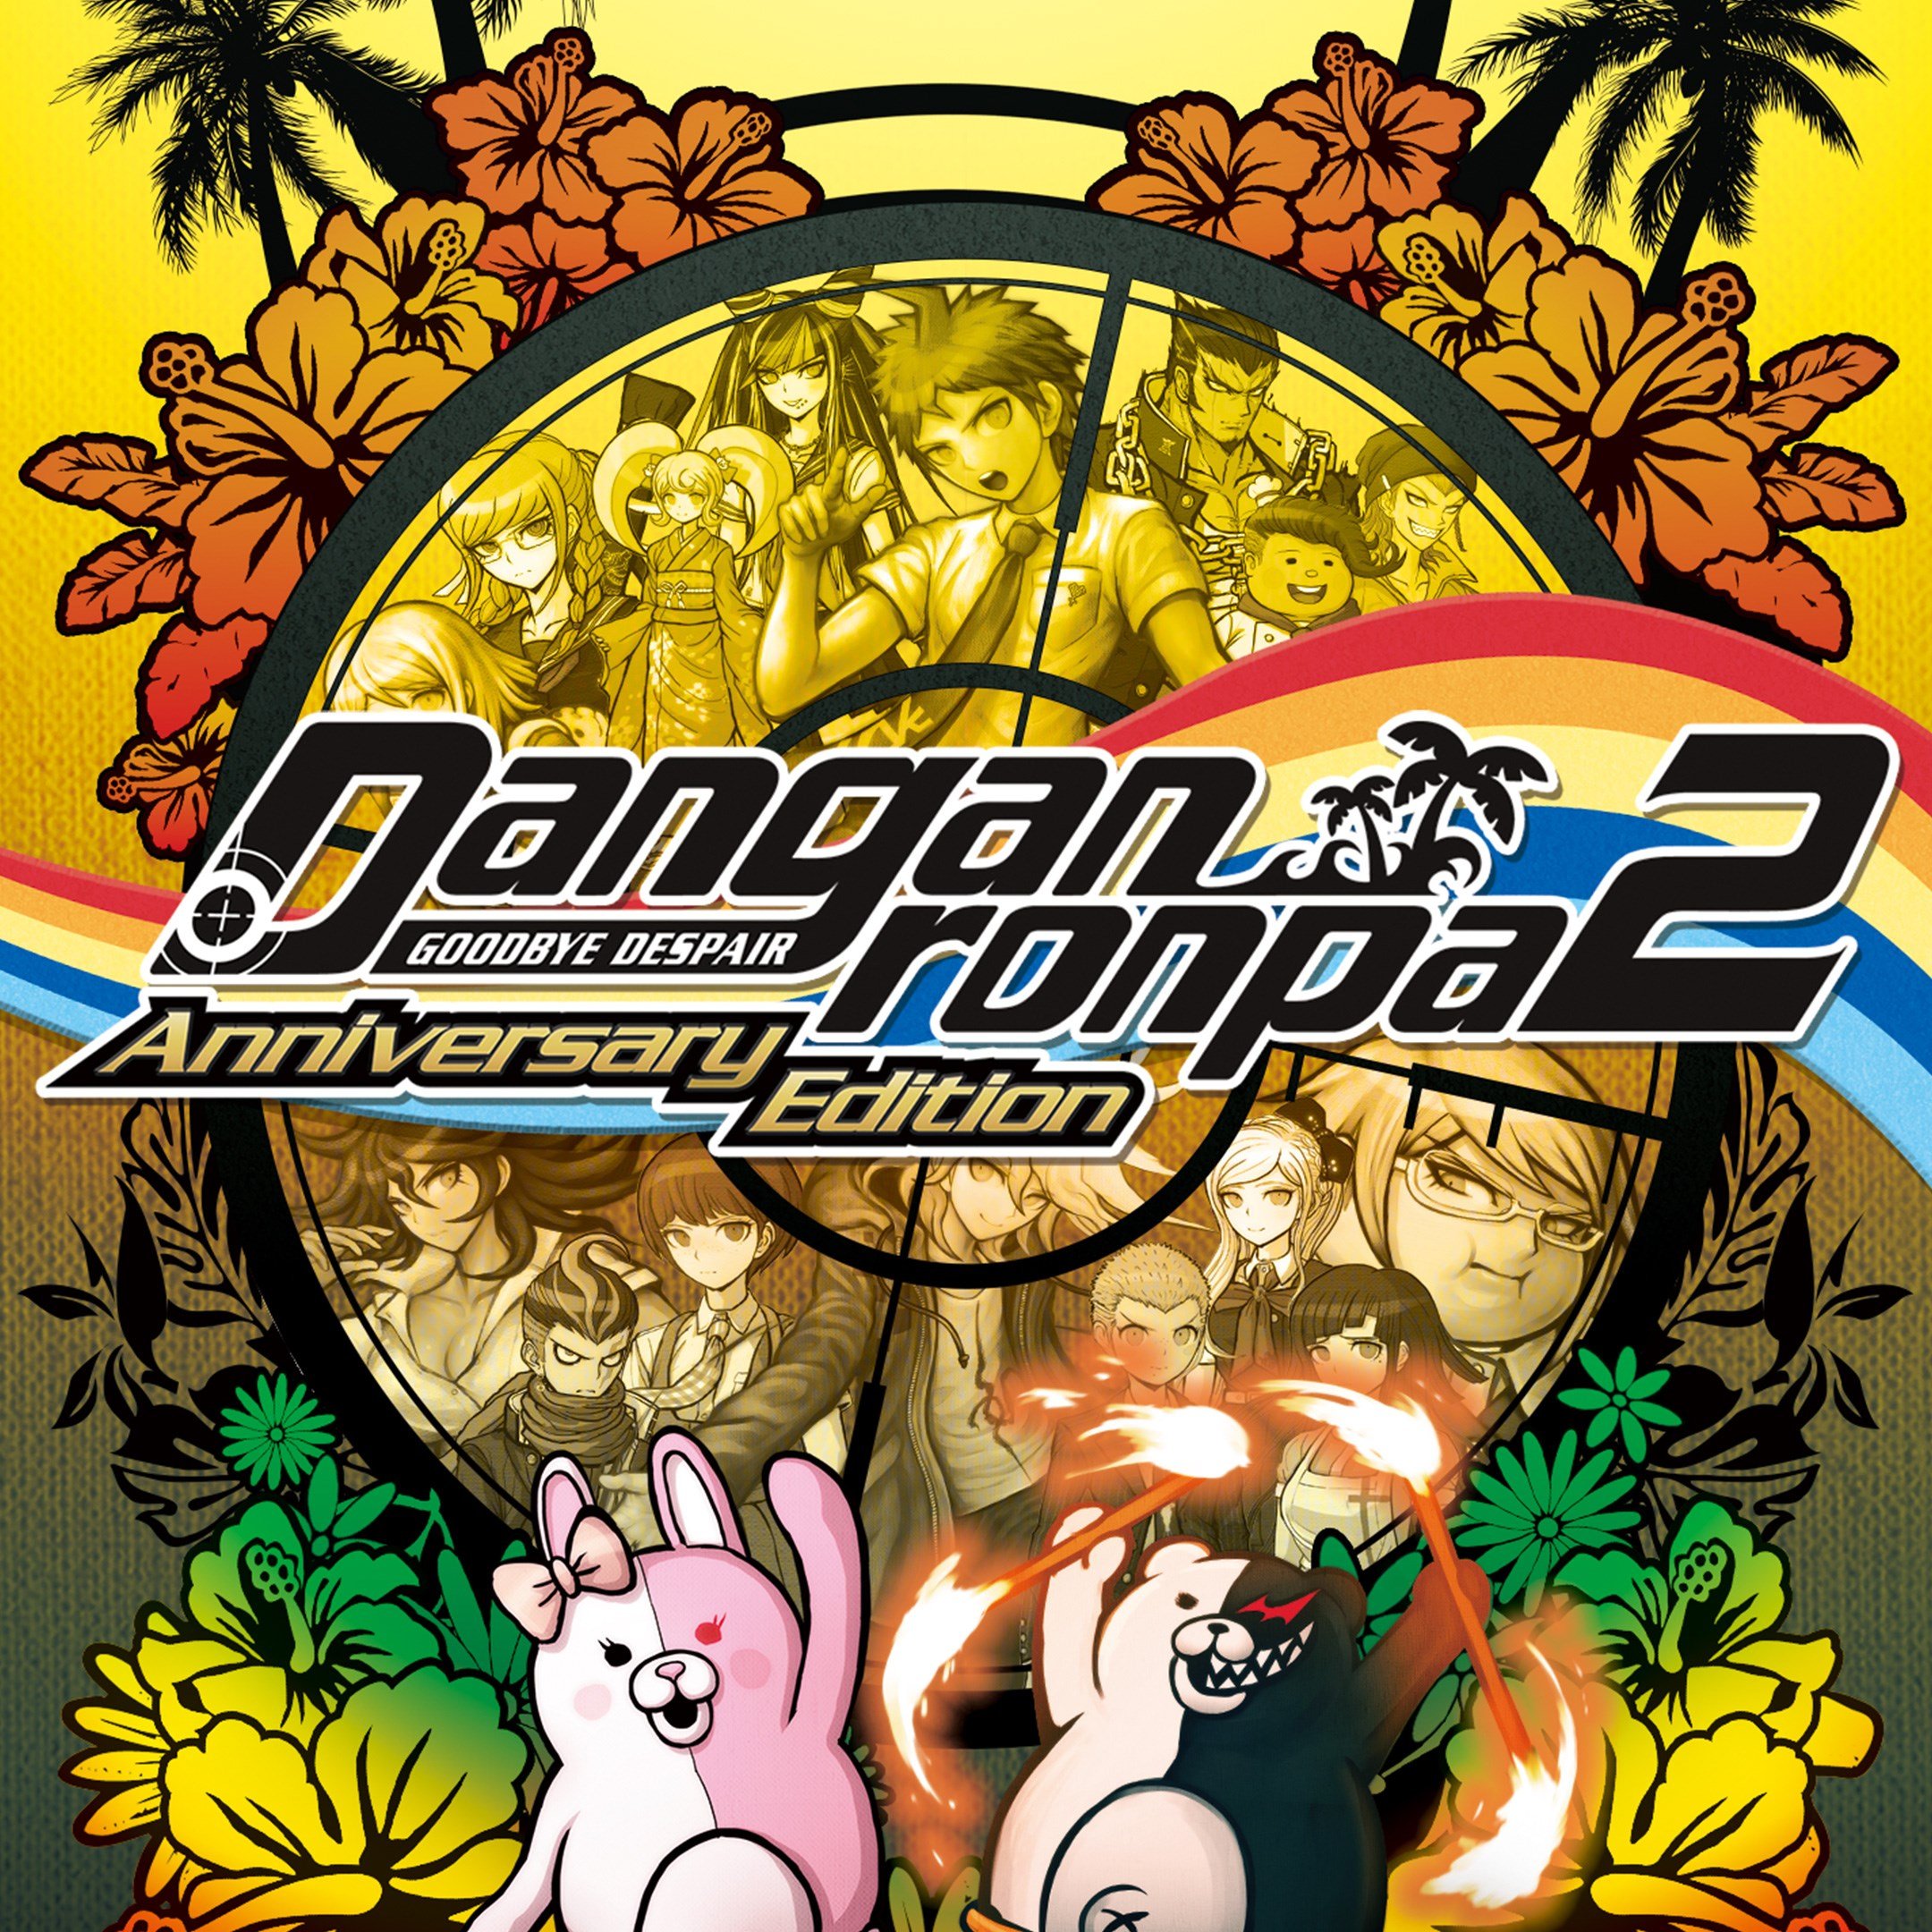 Boxart for Danganronpa 2: Goodbye Despair Anniversary Edition